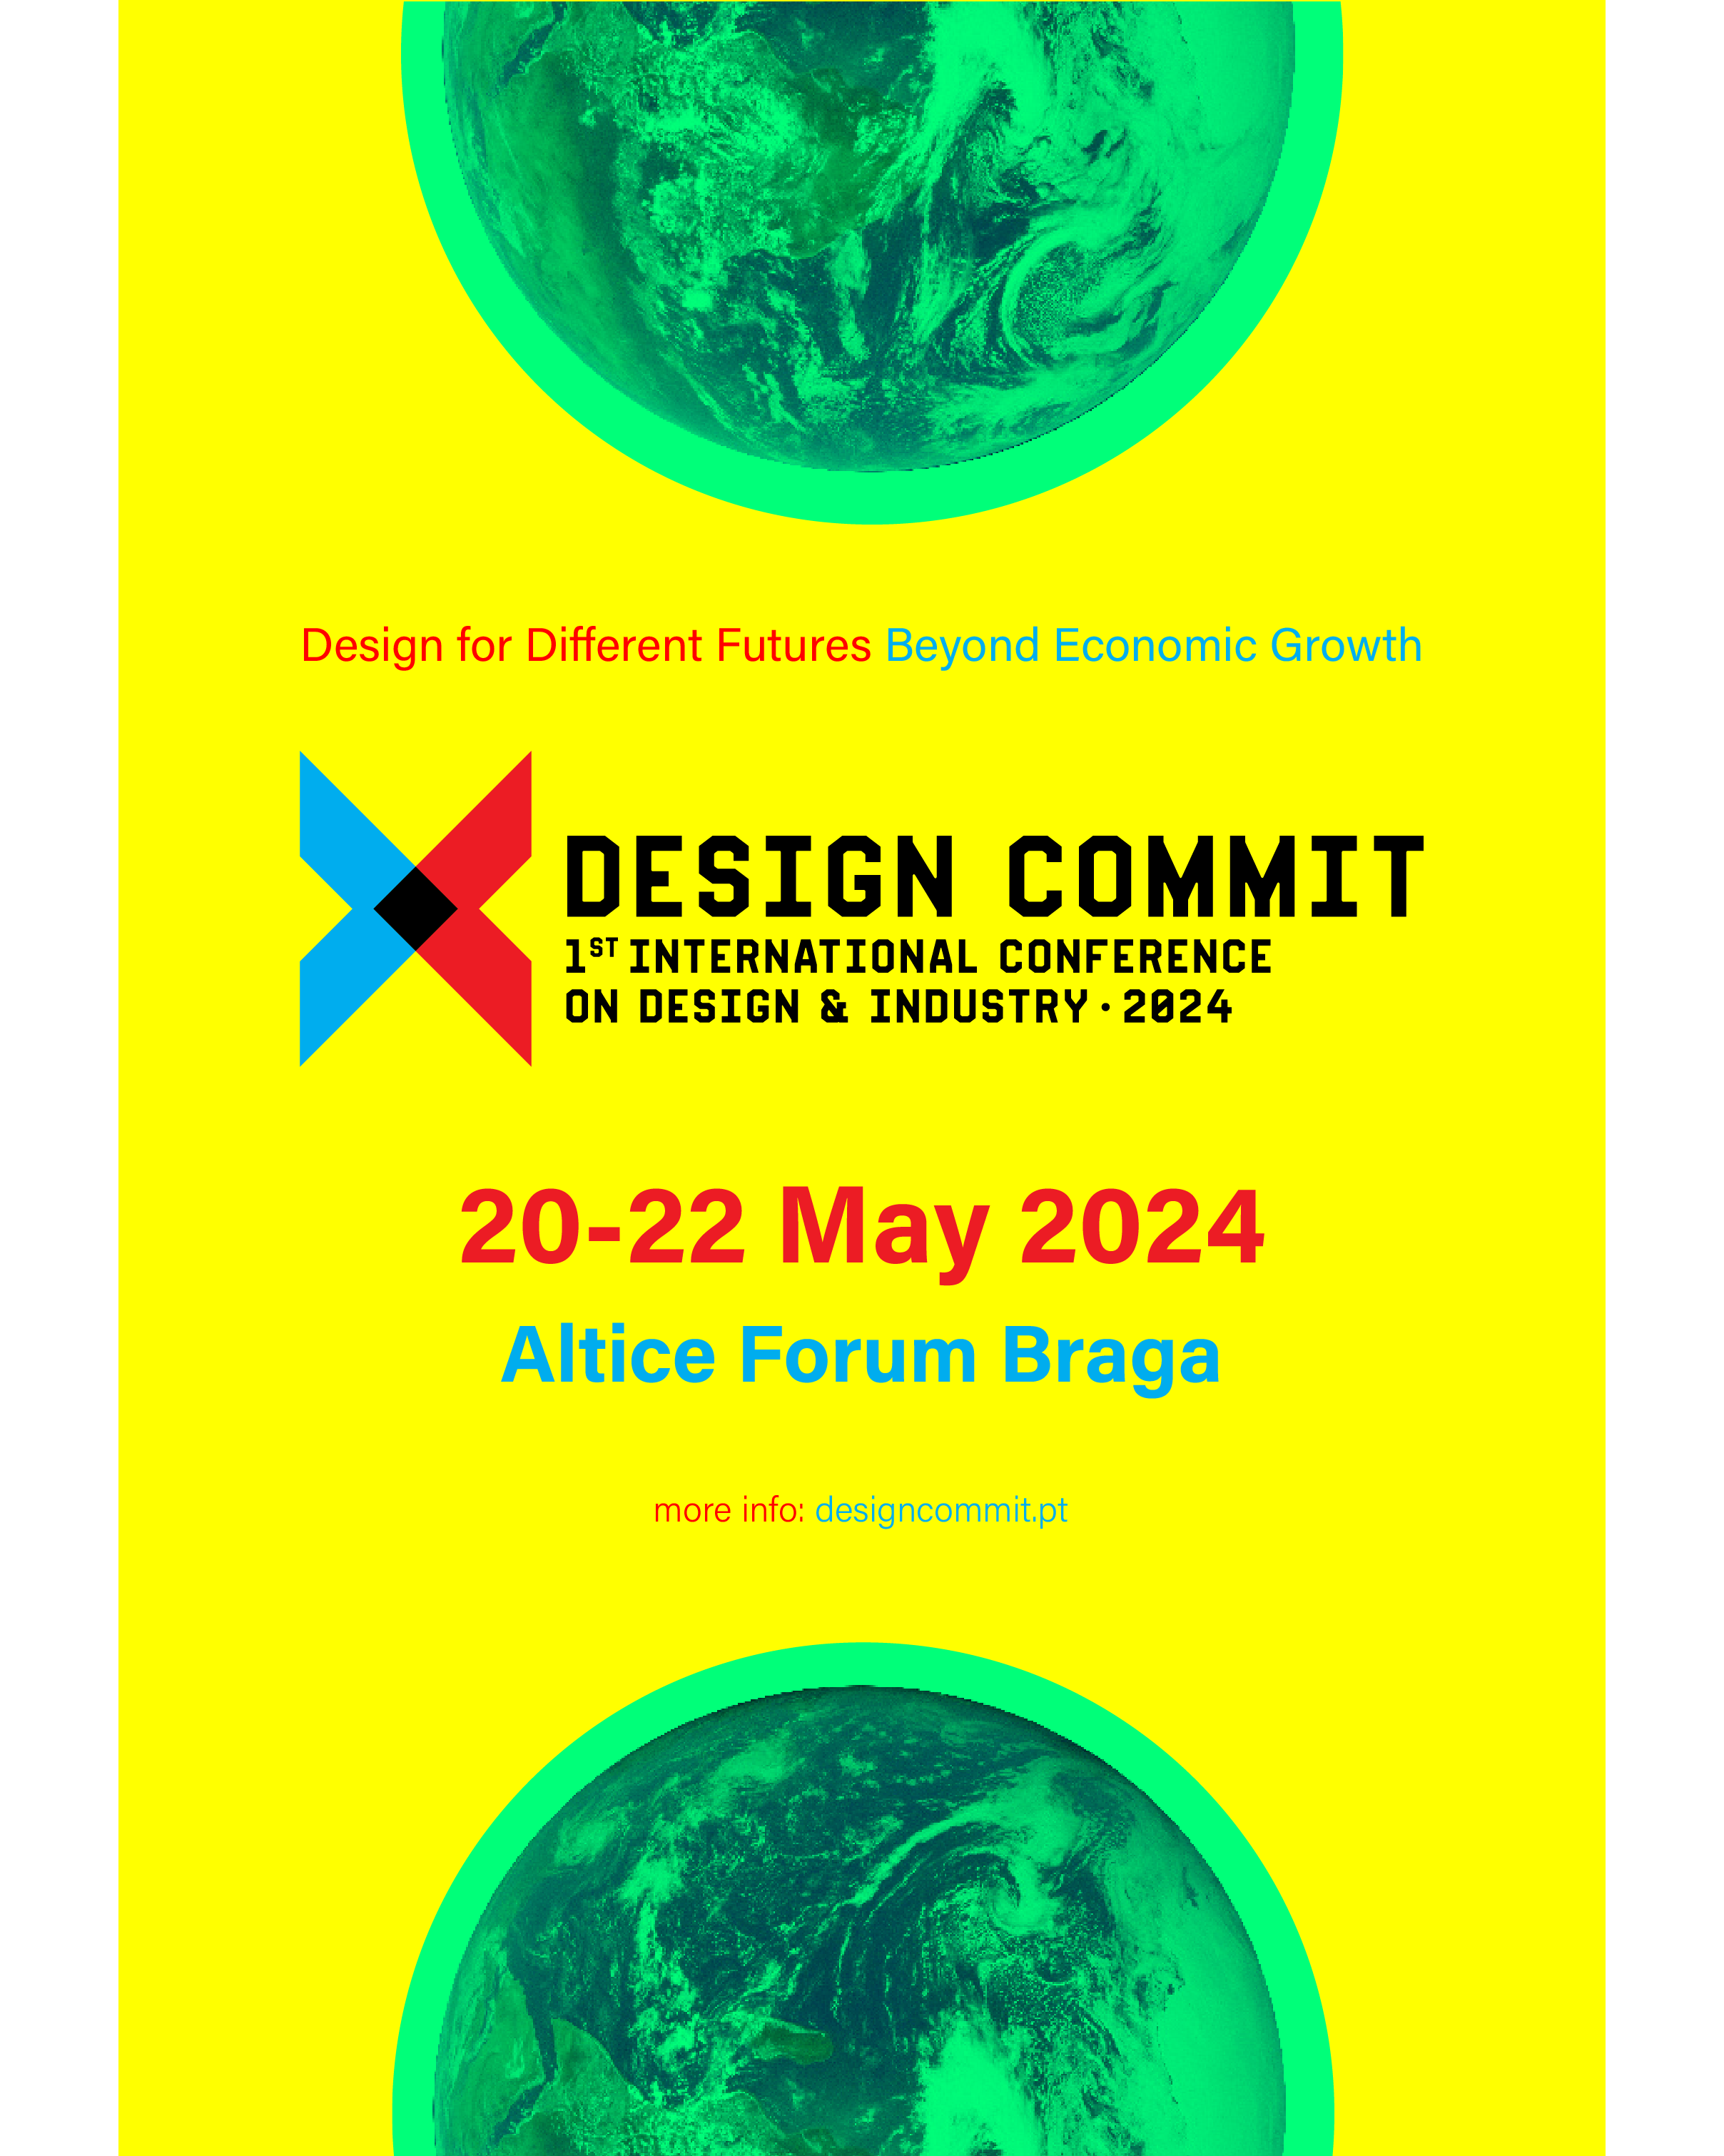 DESIGN COMMIT 2024 - 1st International Conference on Design & Industry image